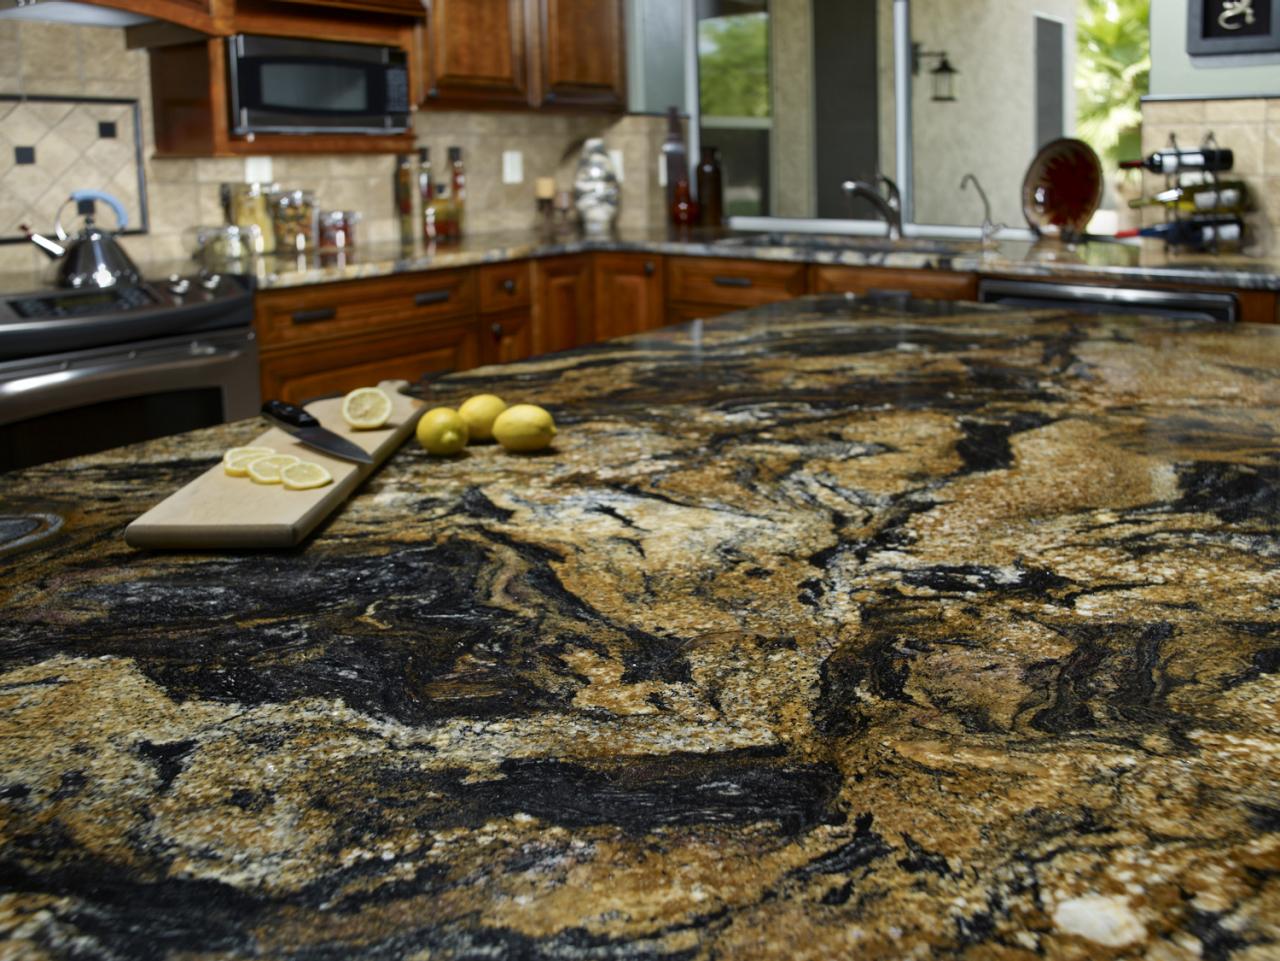 granite kitchen countertops pictures photo - 4